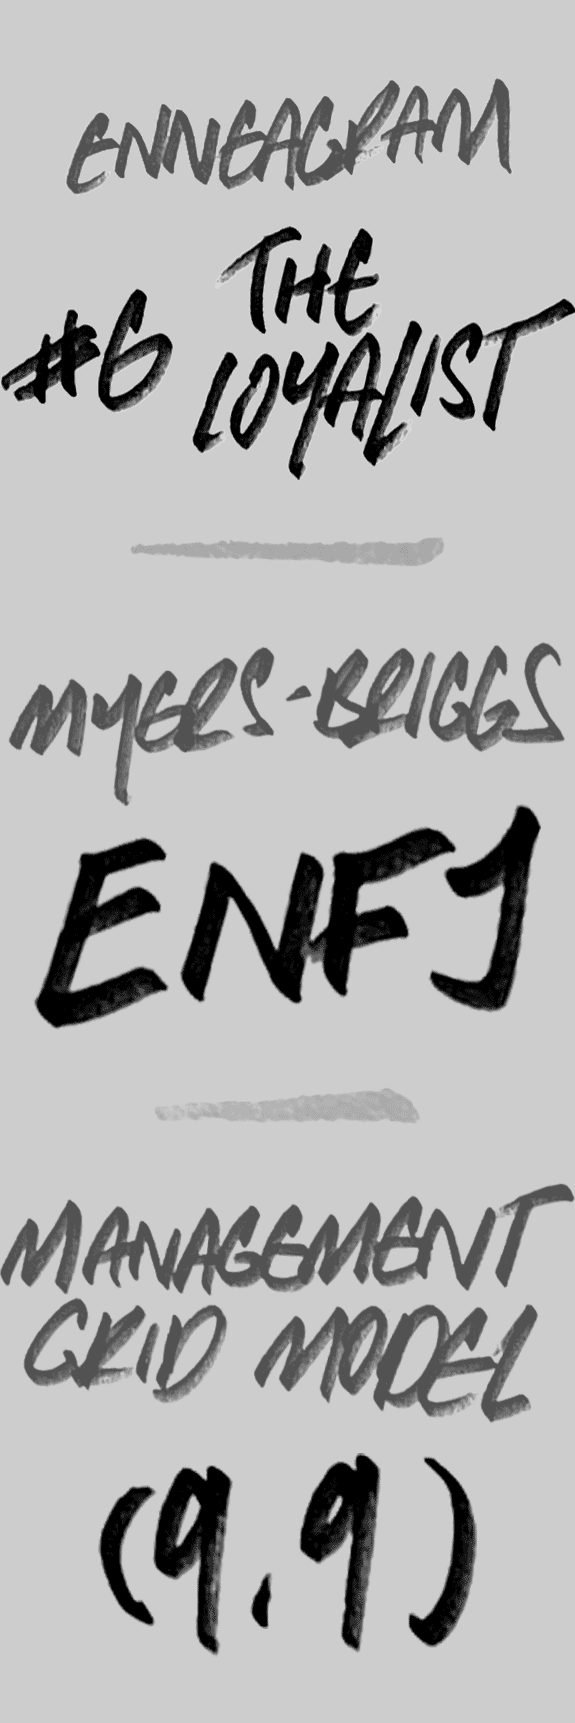 Enneagram #6 - The Loyalist | Myers-Briggs  - ENFJ | Management Grid Model Management Style (9,9)